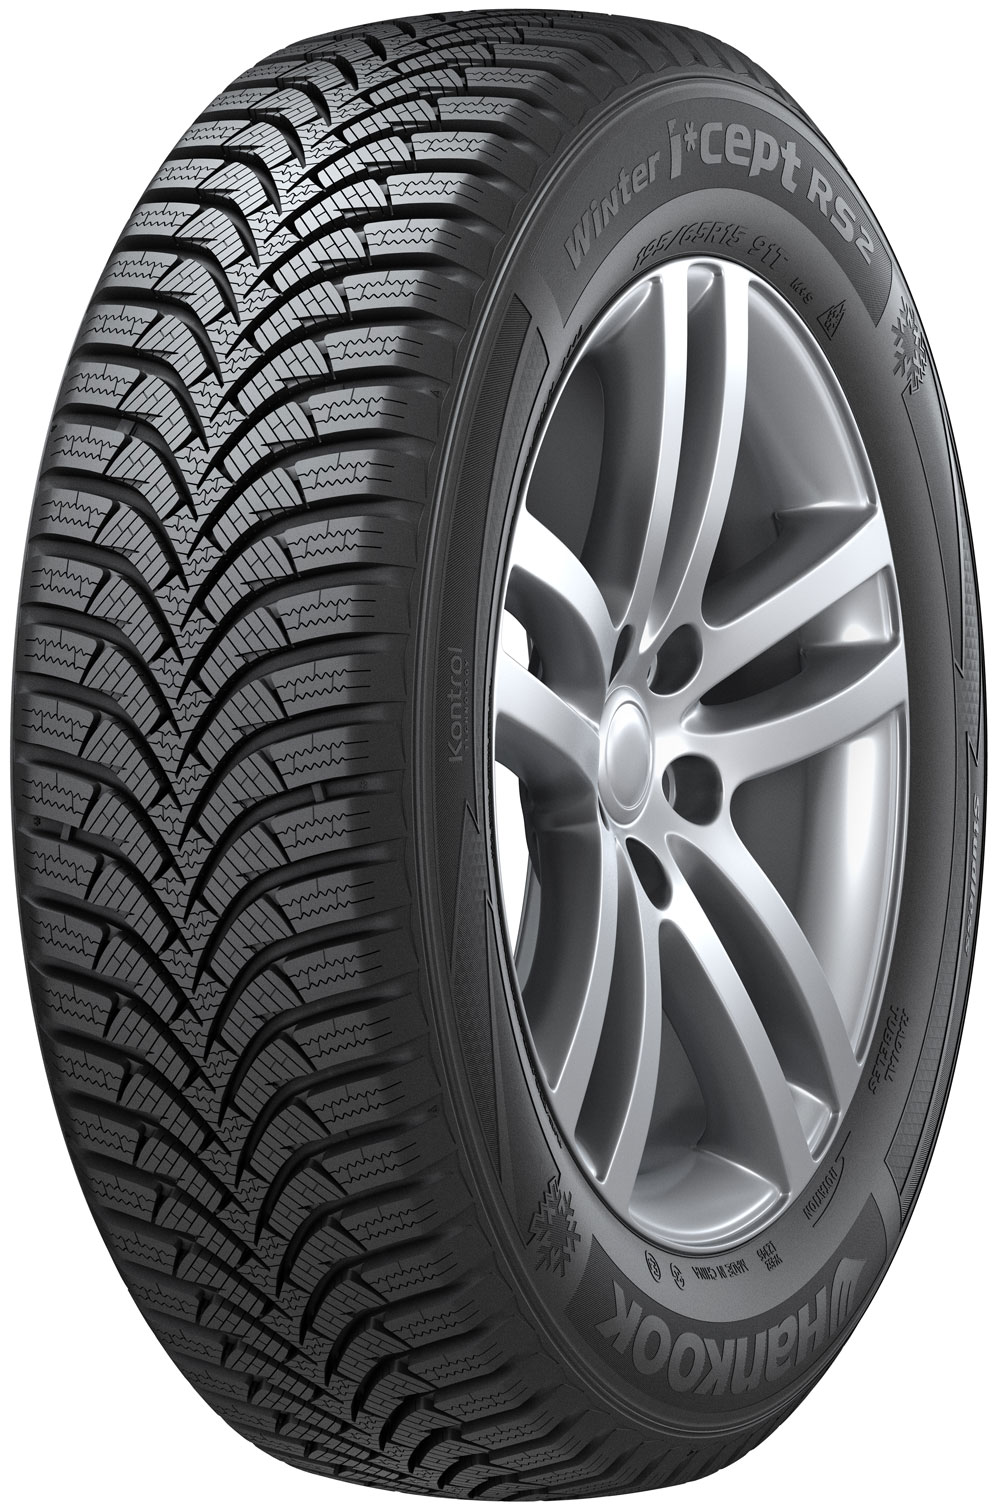 Автомобилни гуми HANKOOK Winter icept RS 2 (W452) BMW 195/50 R15 82T